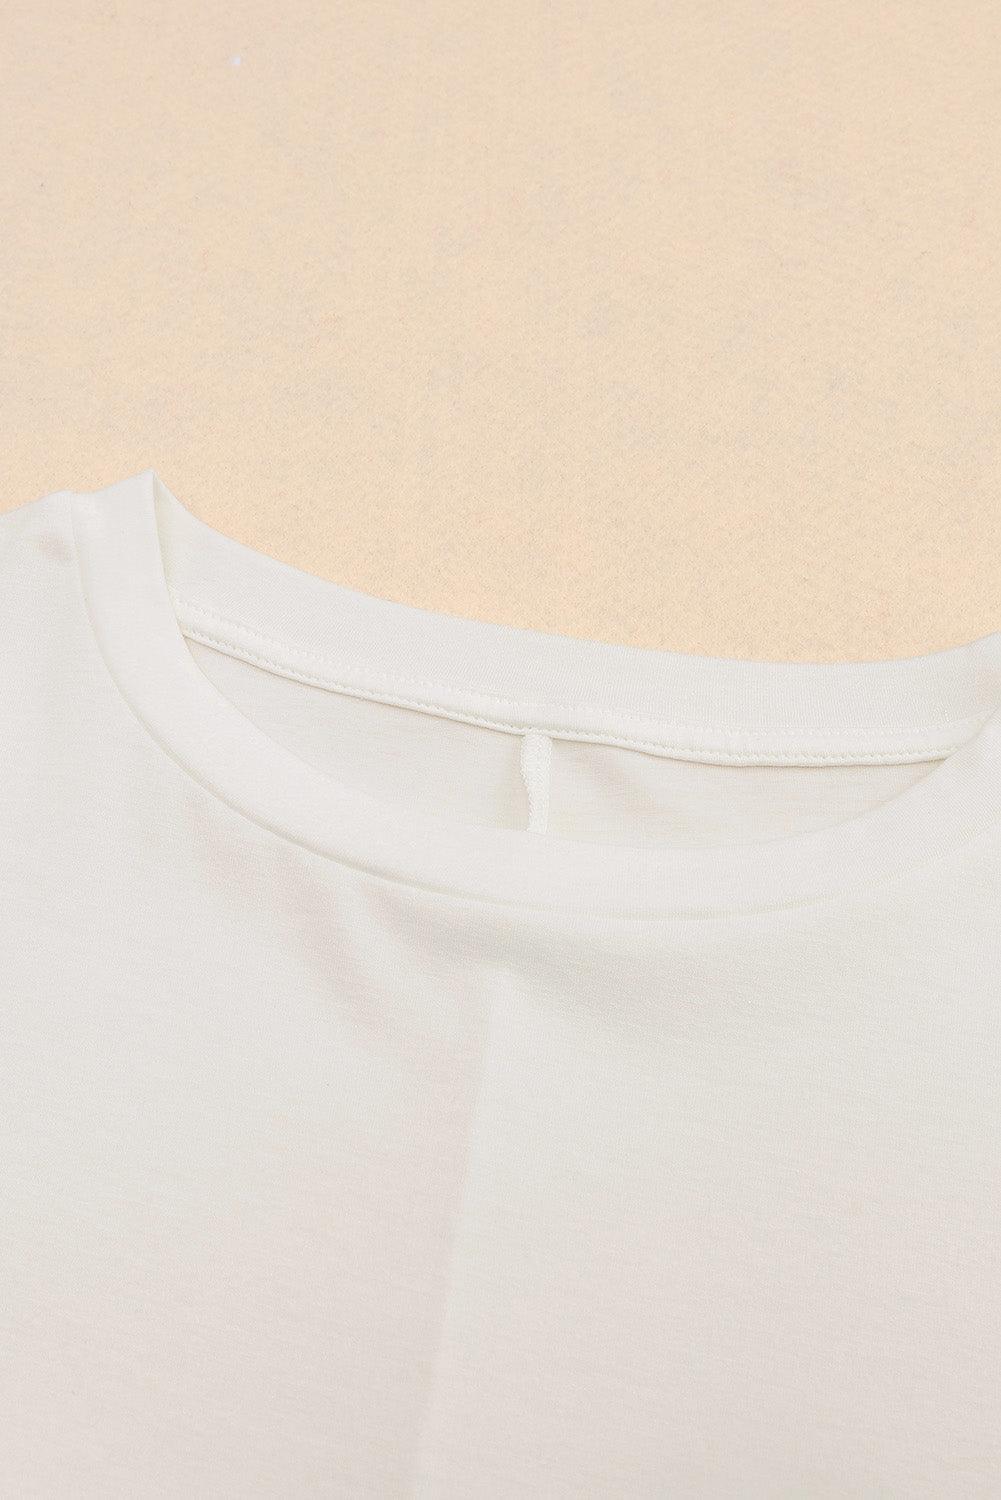 White Side Pockets Short Sleeve Tunic Top - L & M Kee, LLC